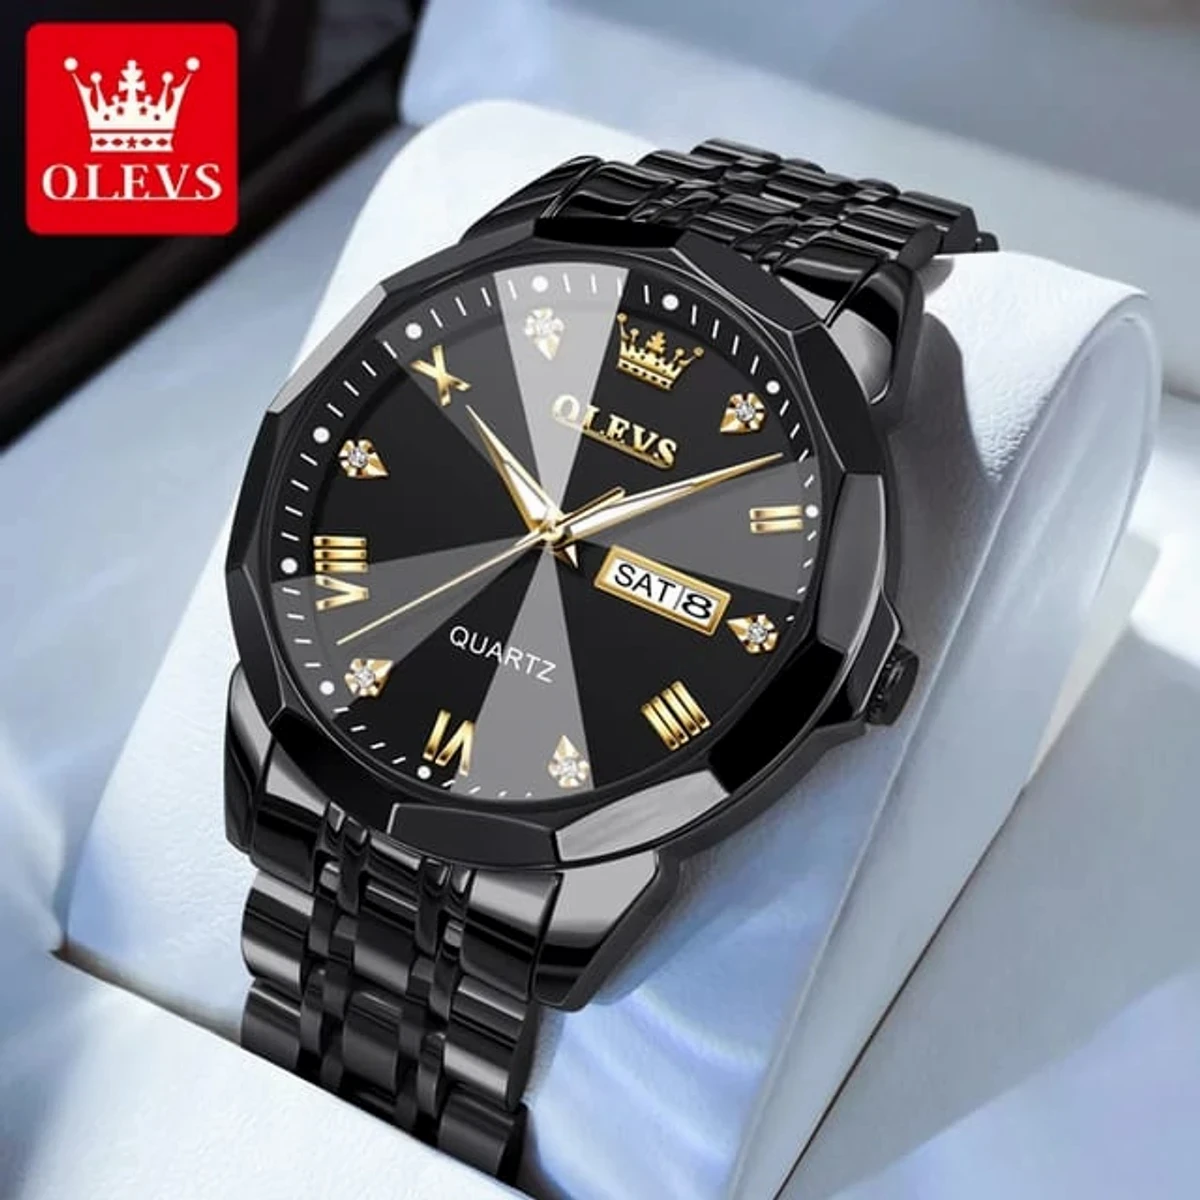 OLEVS MODEL 9931 Watch for Men Stainless Steel Watches - 9941 FULL BLACK WATCH- MAN  WATCH